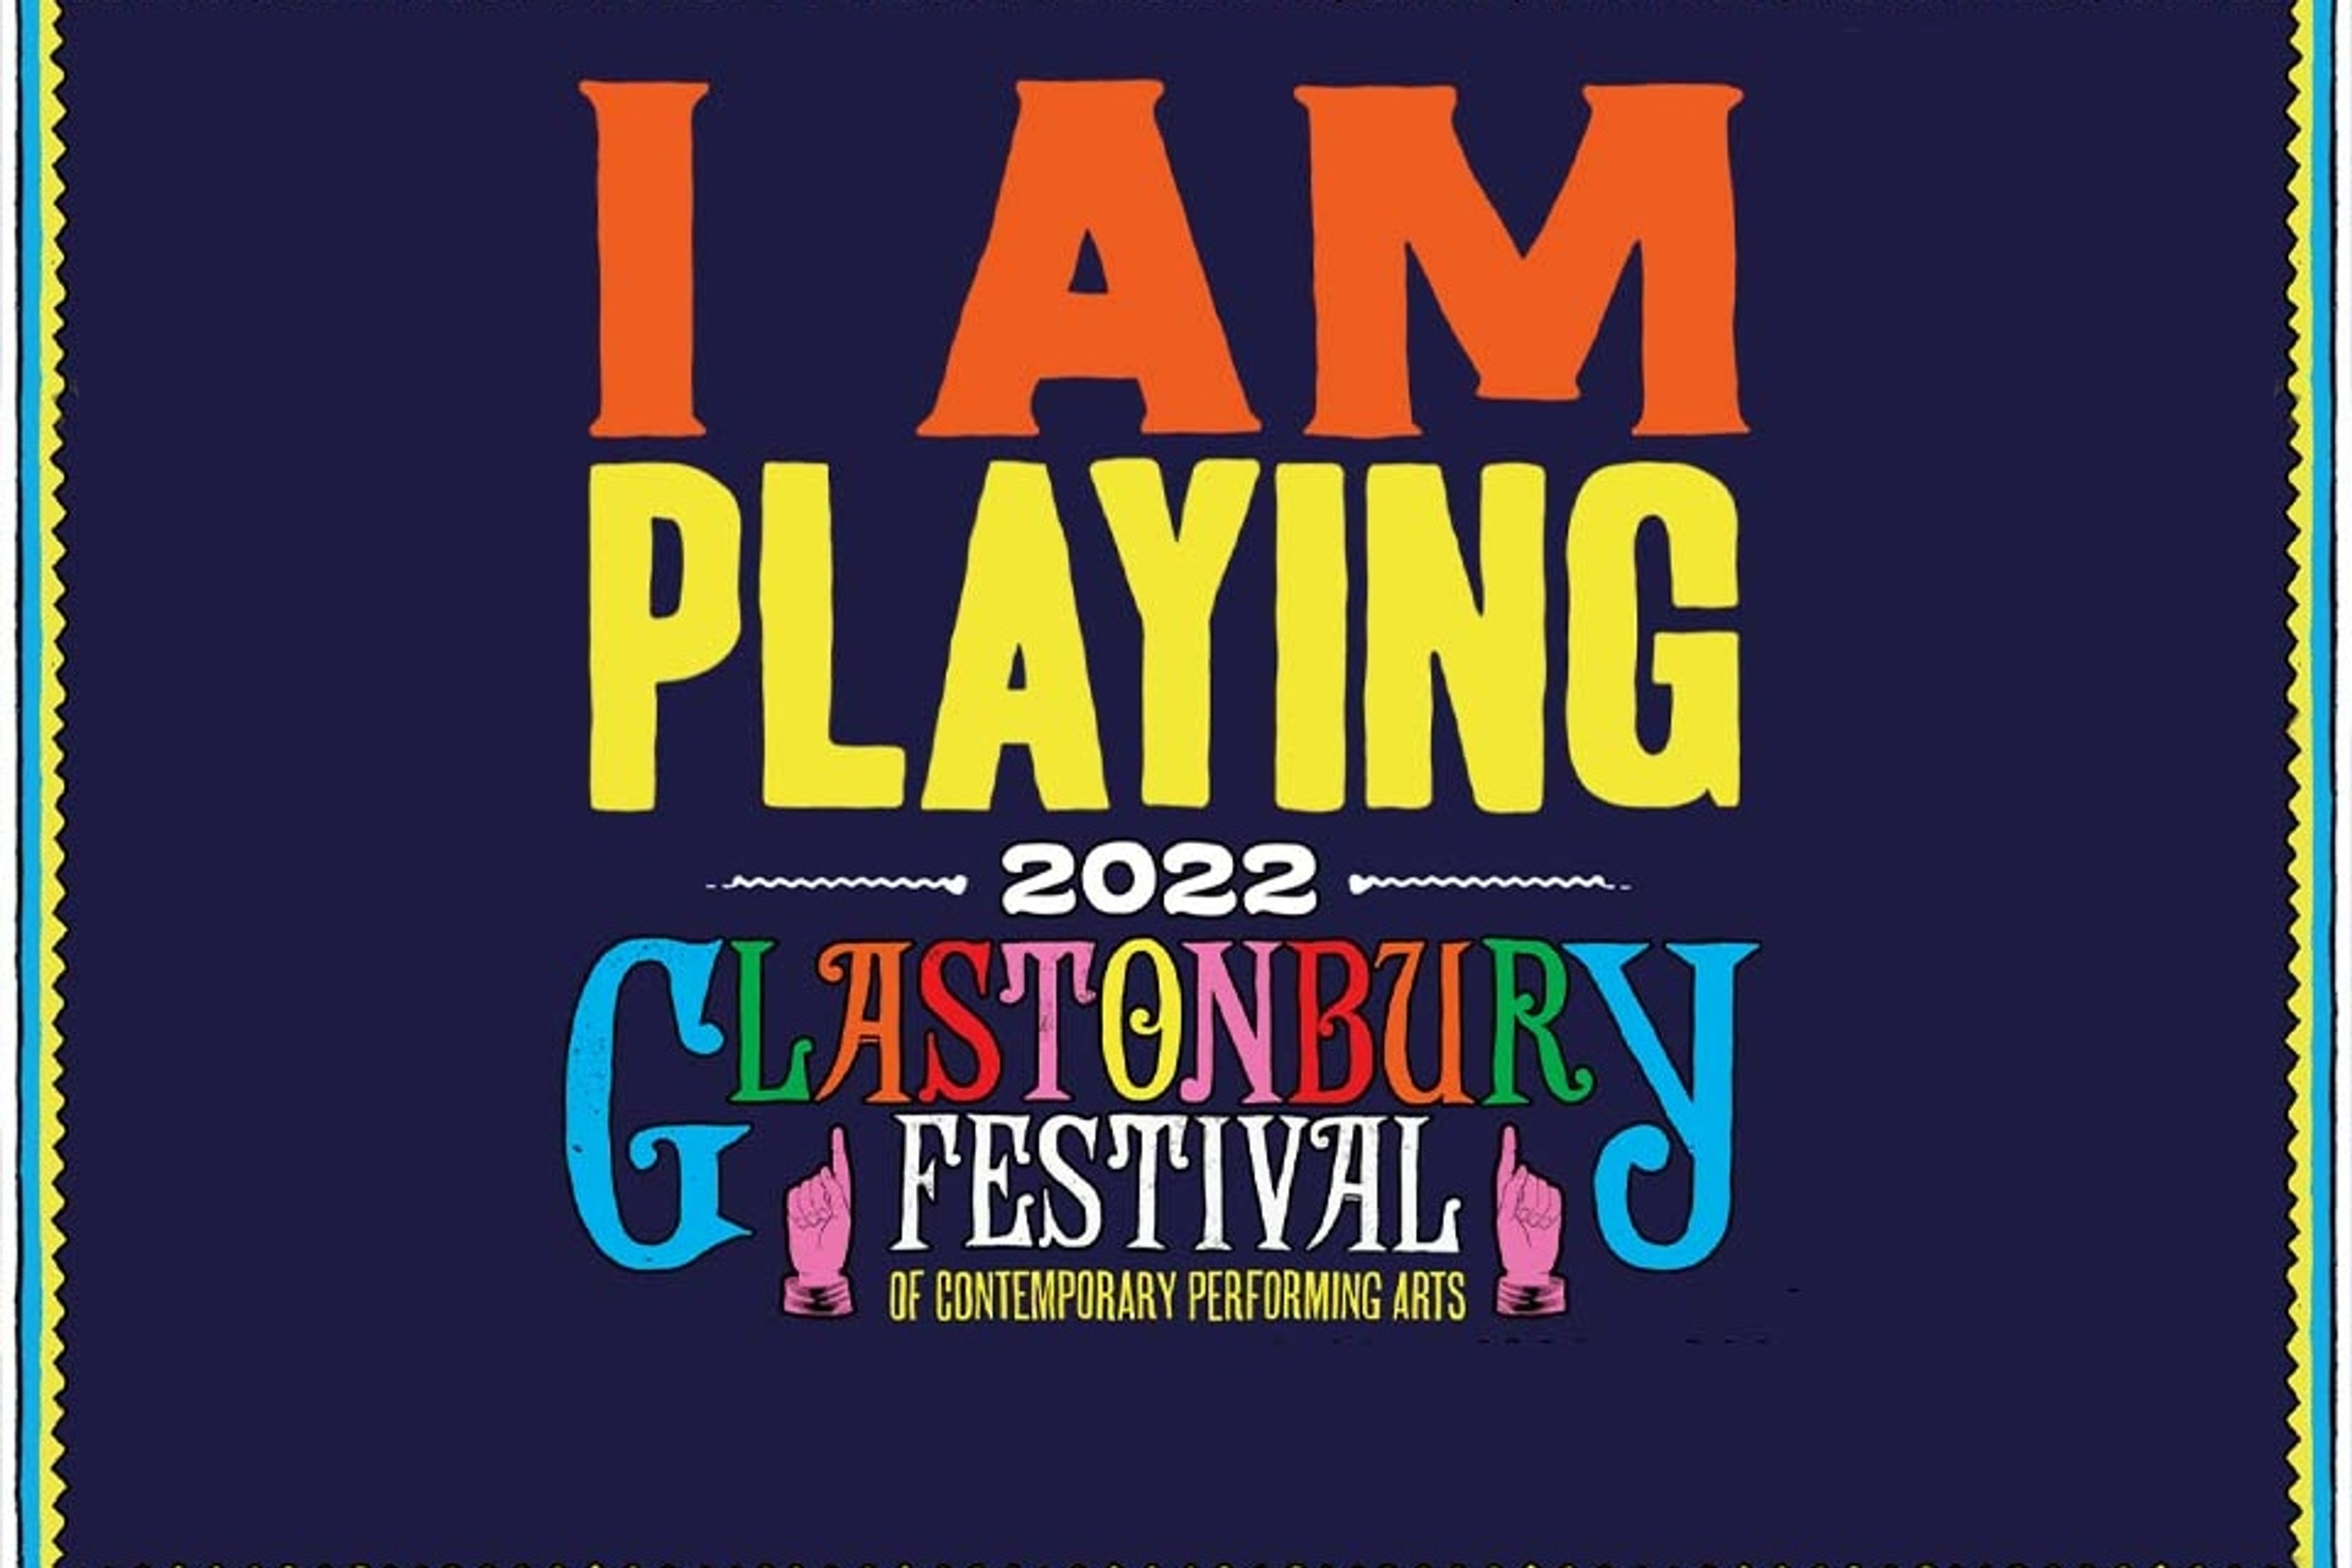 Paul will be playing Glastonbury Festival 022 